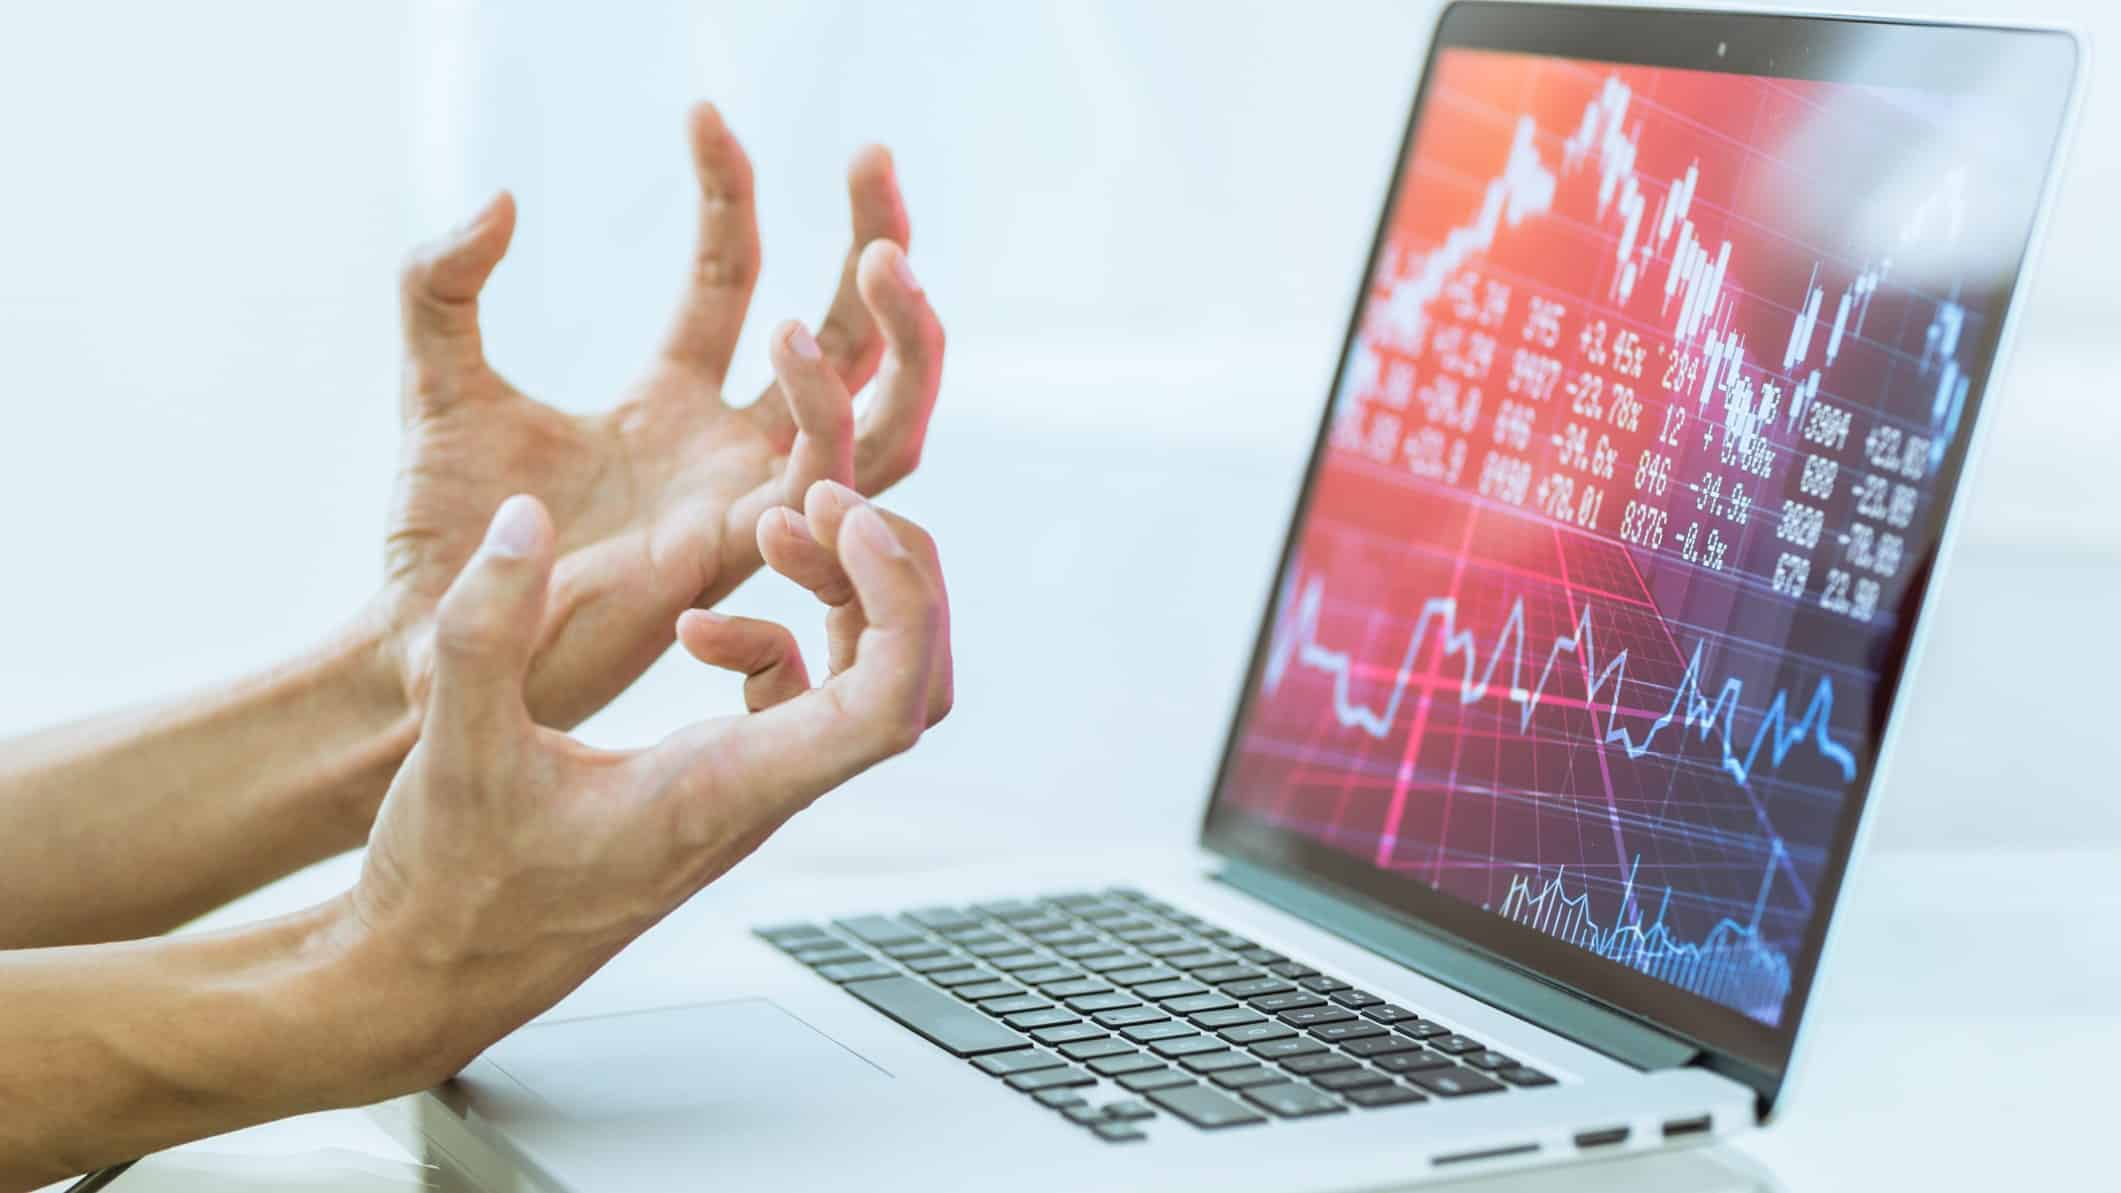 hands making frustrated gesture at computer screen depicting stock market crash charts